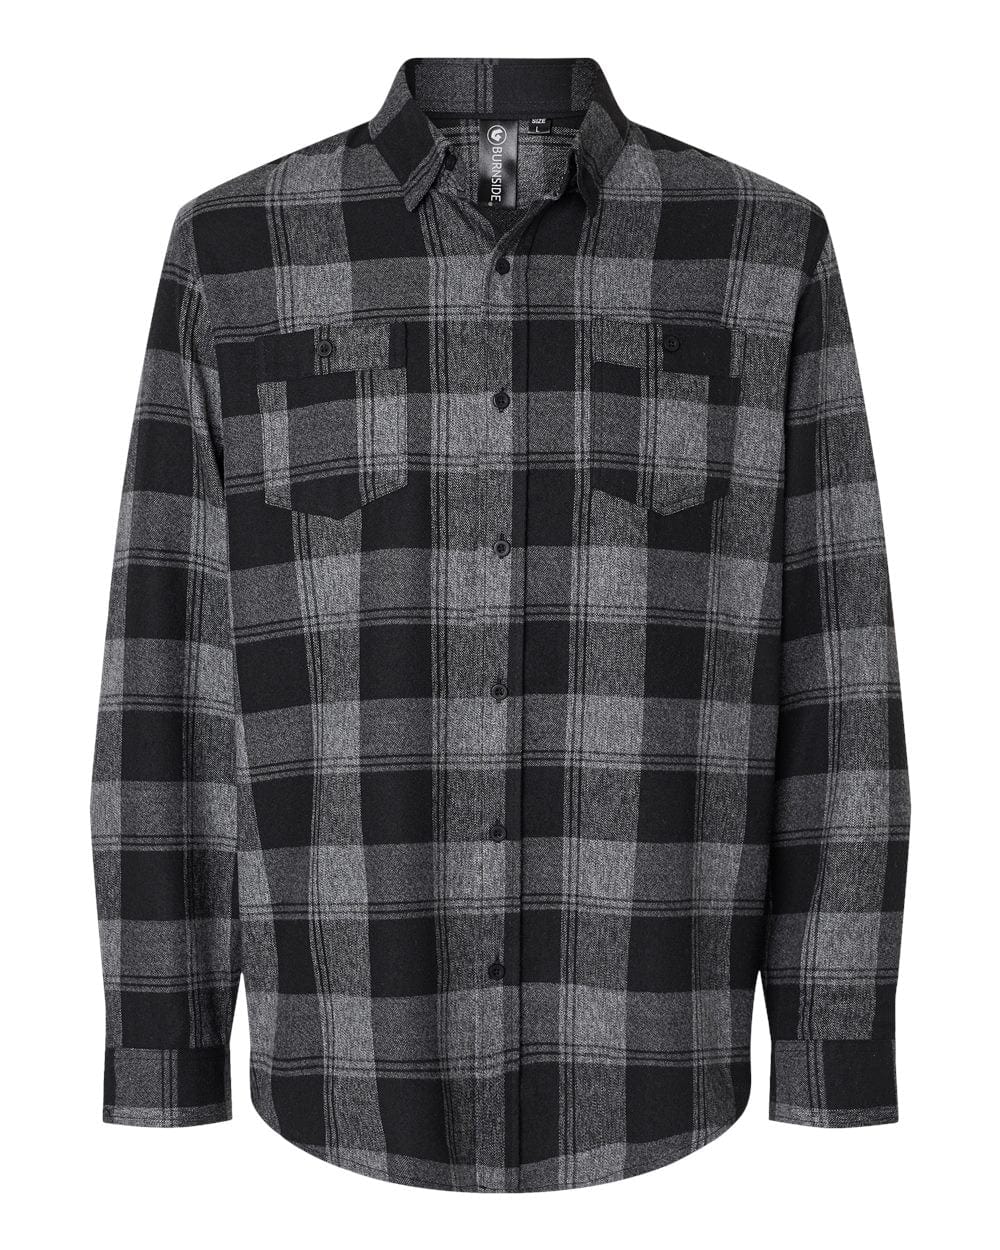 Burnside Woven Shirts S / Grey/Black Burnside - Men's Perfect Flannel Work Shirt